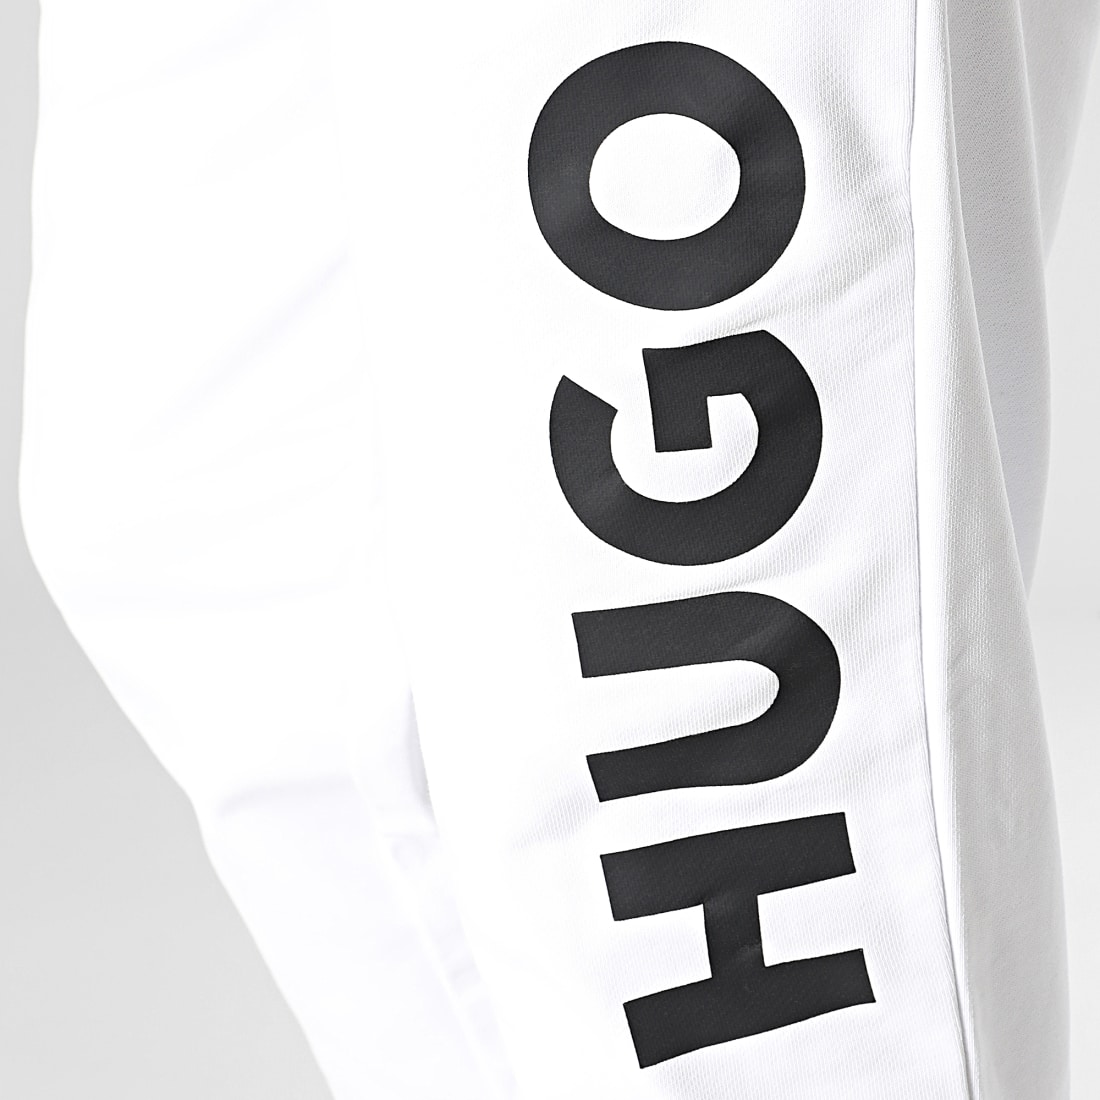 HUGO - Pantalon Jogging Femme 50475992 Blanc 